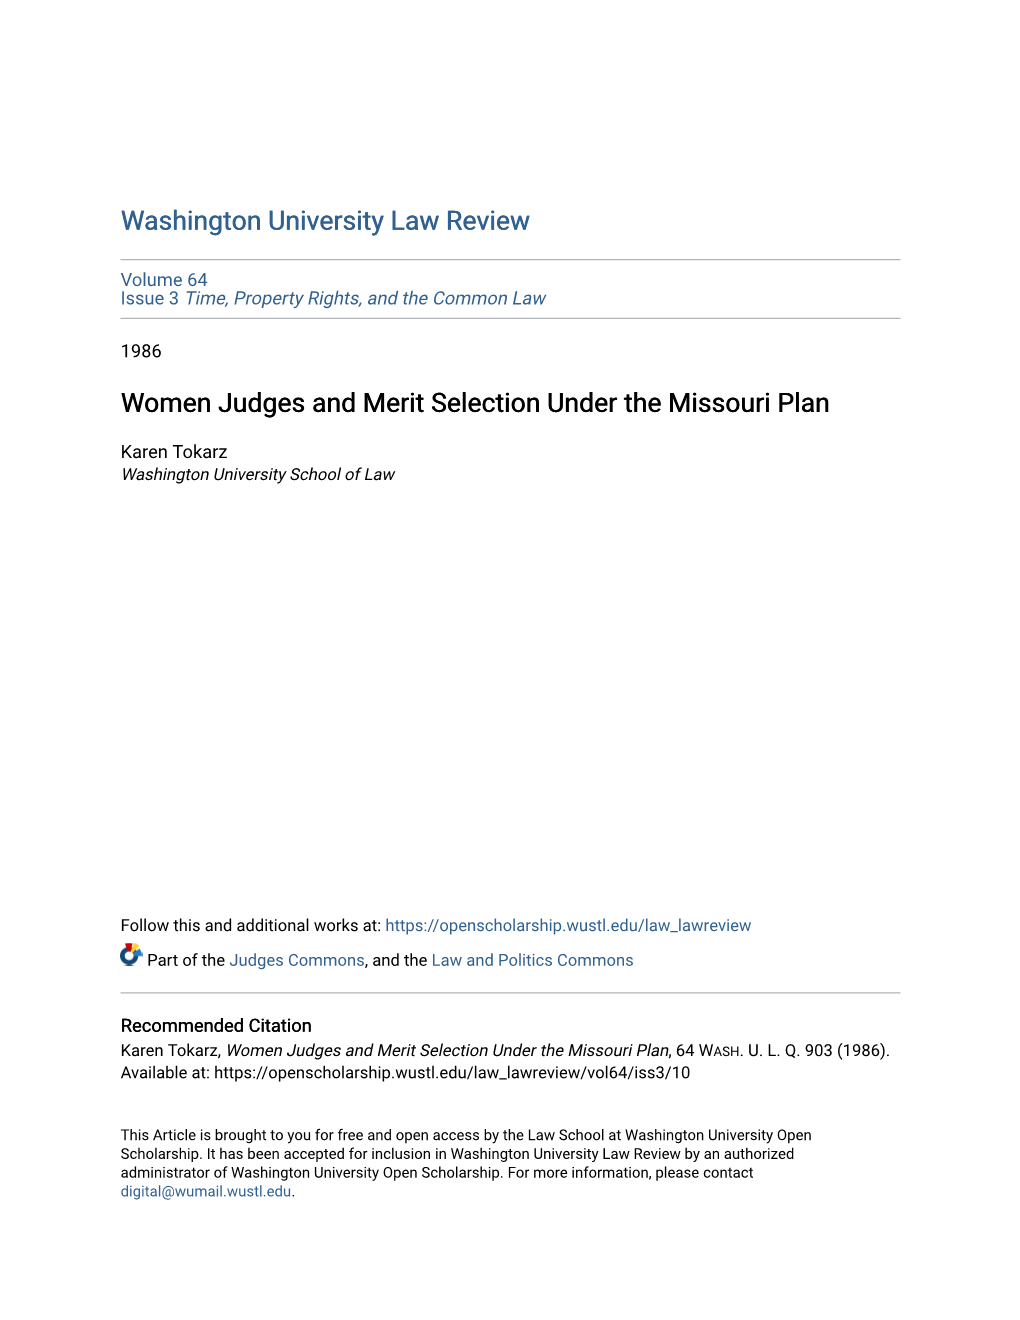 Women Judges and Merit Selection Under the Missouri Plan